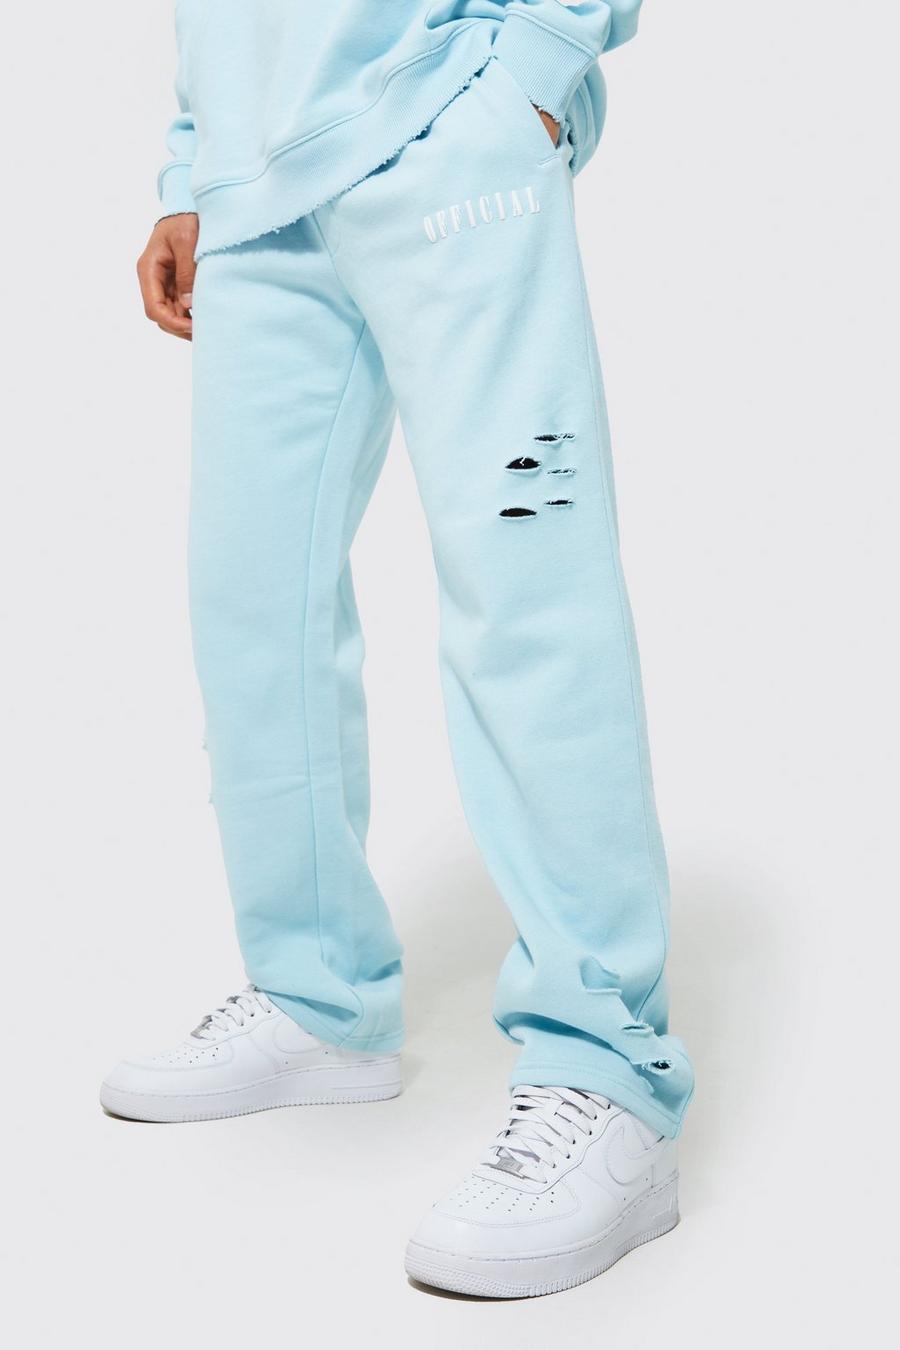 Pantalón deportivo Official oversize de pernera ancha desgastado, Light blue azzurro